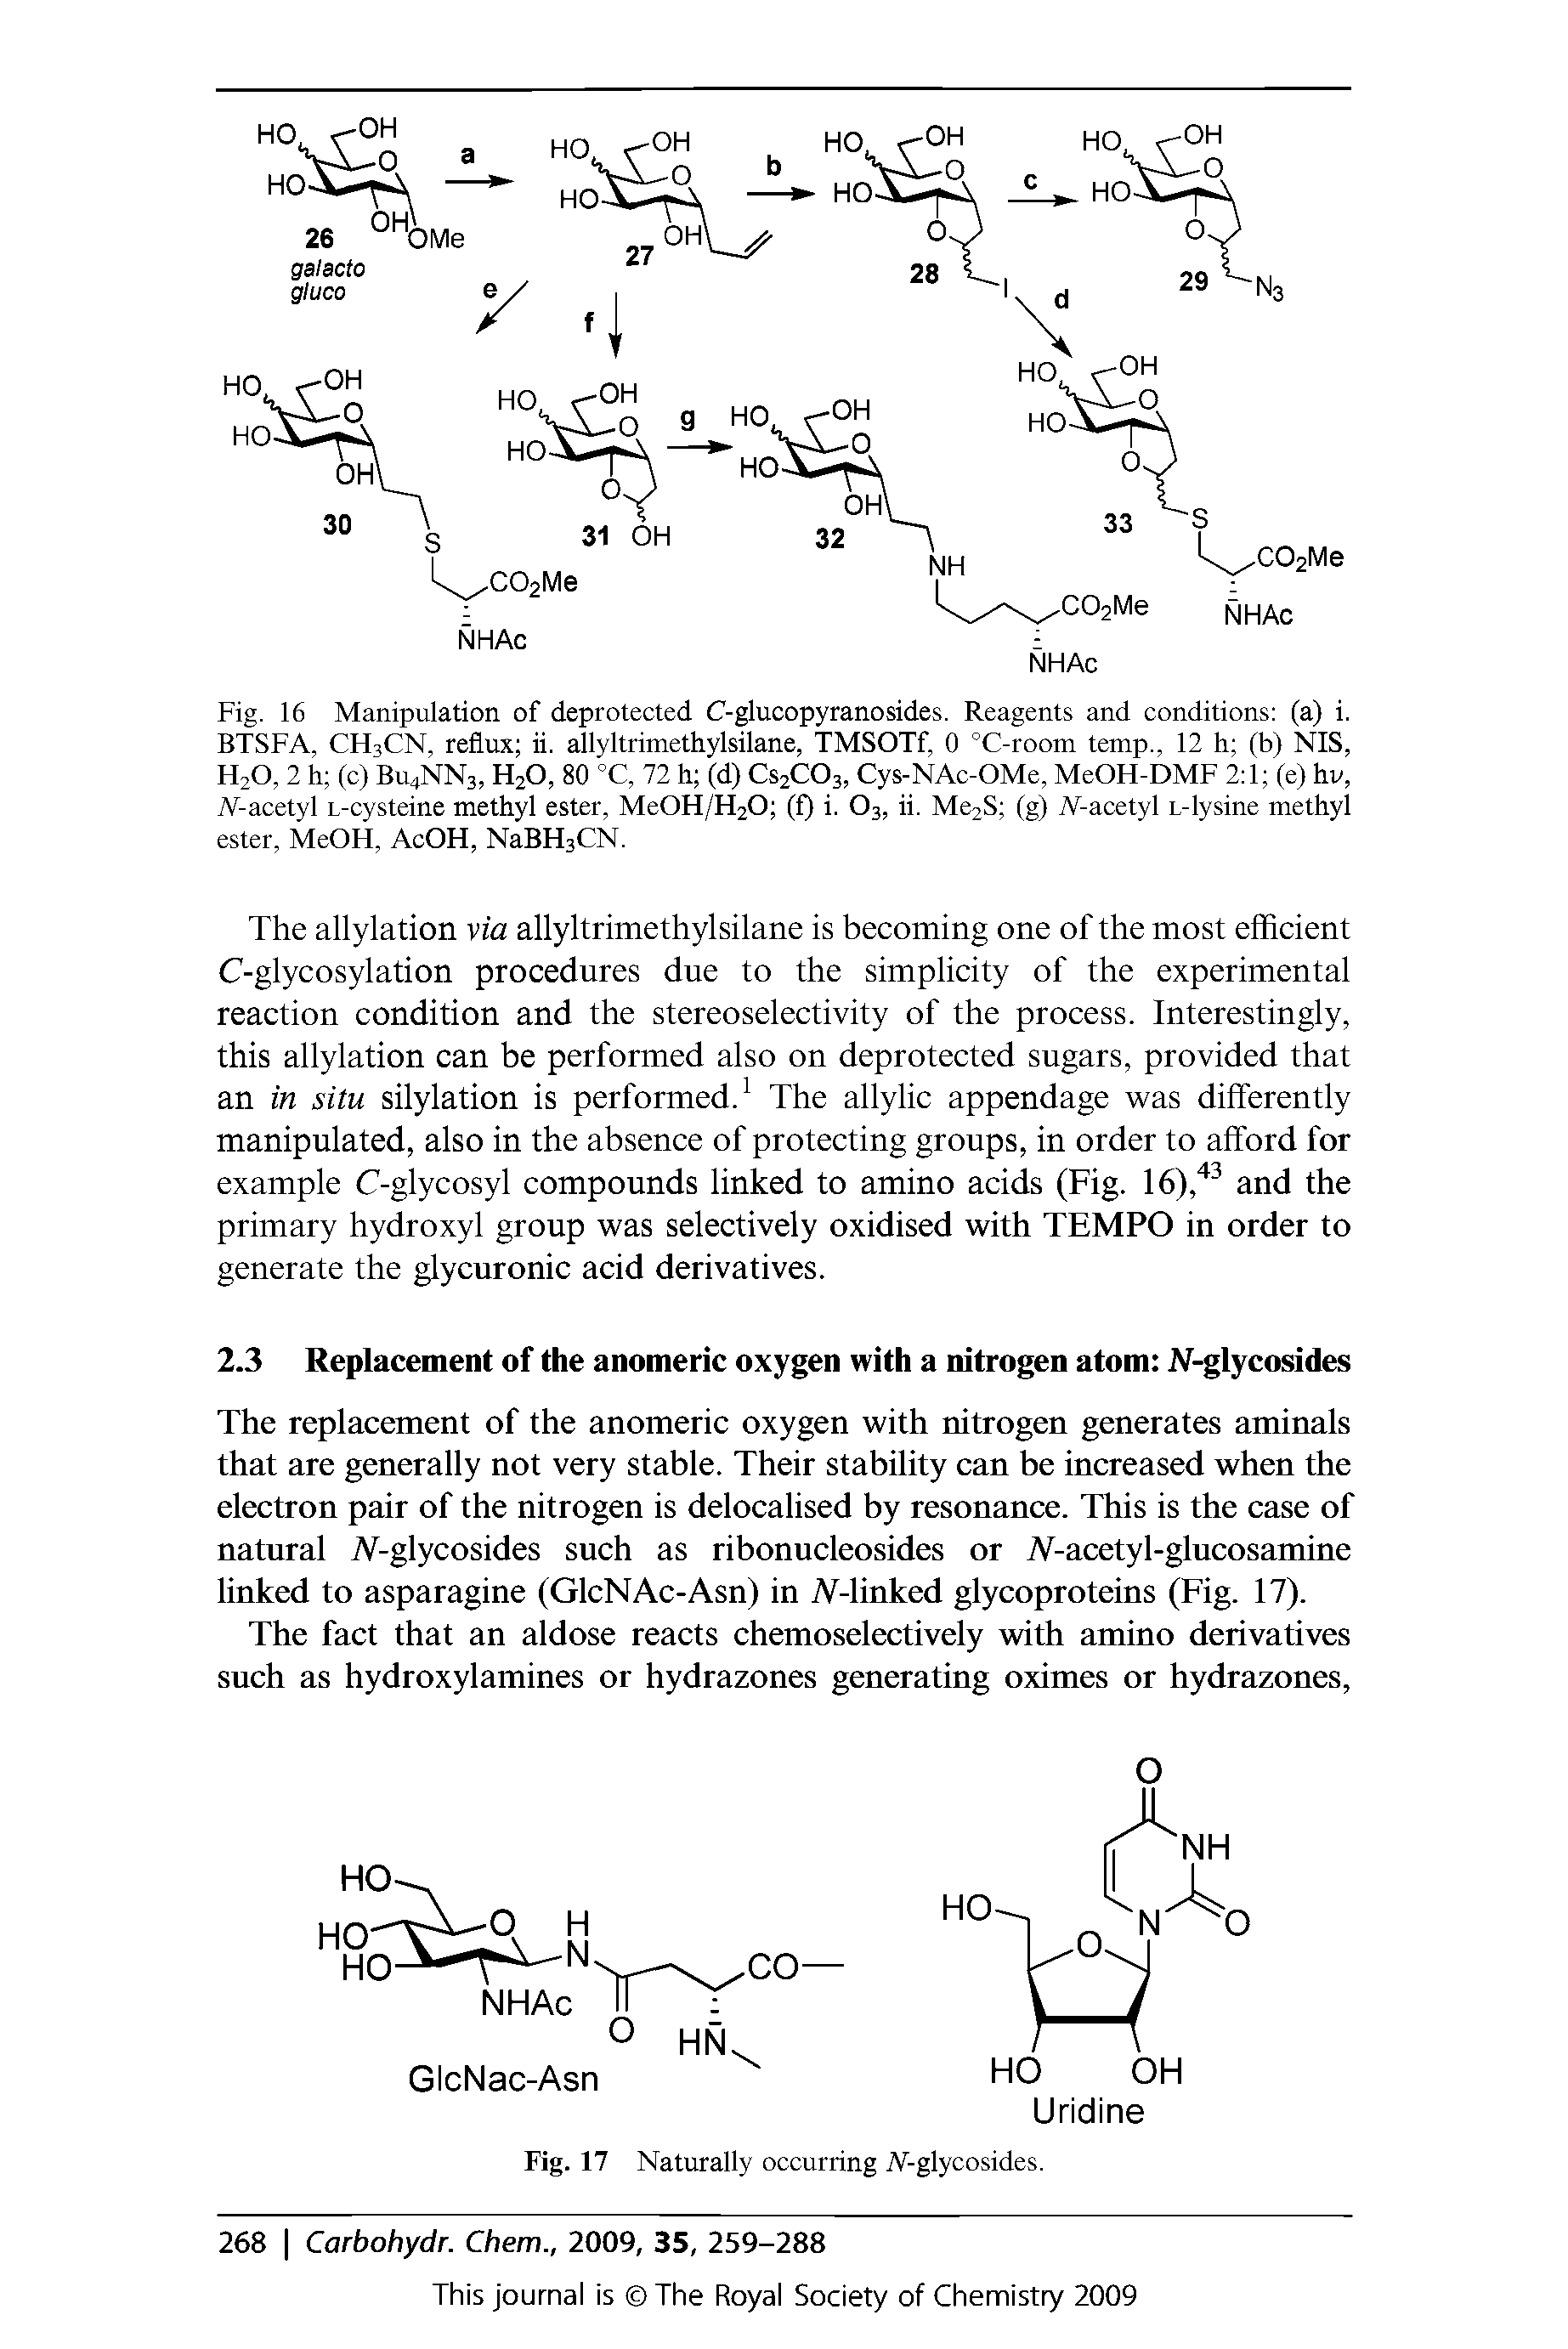 Fig. 16 Manipulation of deprotected C-glucopyranosides. Reagents and conditions (a) i. BTSFA, CH3CN, reflux ii. allyltrimethylsilane, TMSOTf, 0 °C-room temp., 12 h (b) NIS, HzO, 2 h (c) Bu4NN3, H20, 80 °C, 72 h (d) Cs2C03, Cys-NAc-OMe, MeOH-DMF 2 1 (e) hv, W-acetyl L-cvsteine methyl ester, MeOH/H20 (f) i. 03, ii. Me2S (g) W-acetyl L-lysine methyl ester, MeOH, AcOH, NaBH3CN.